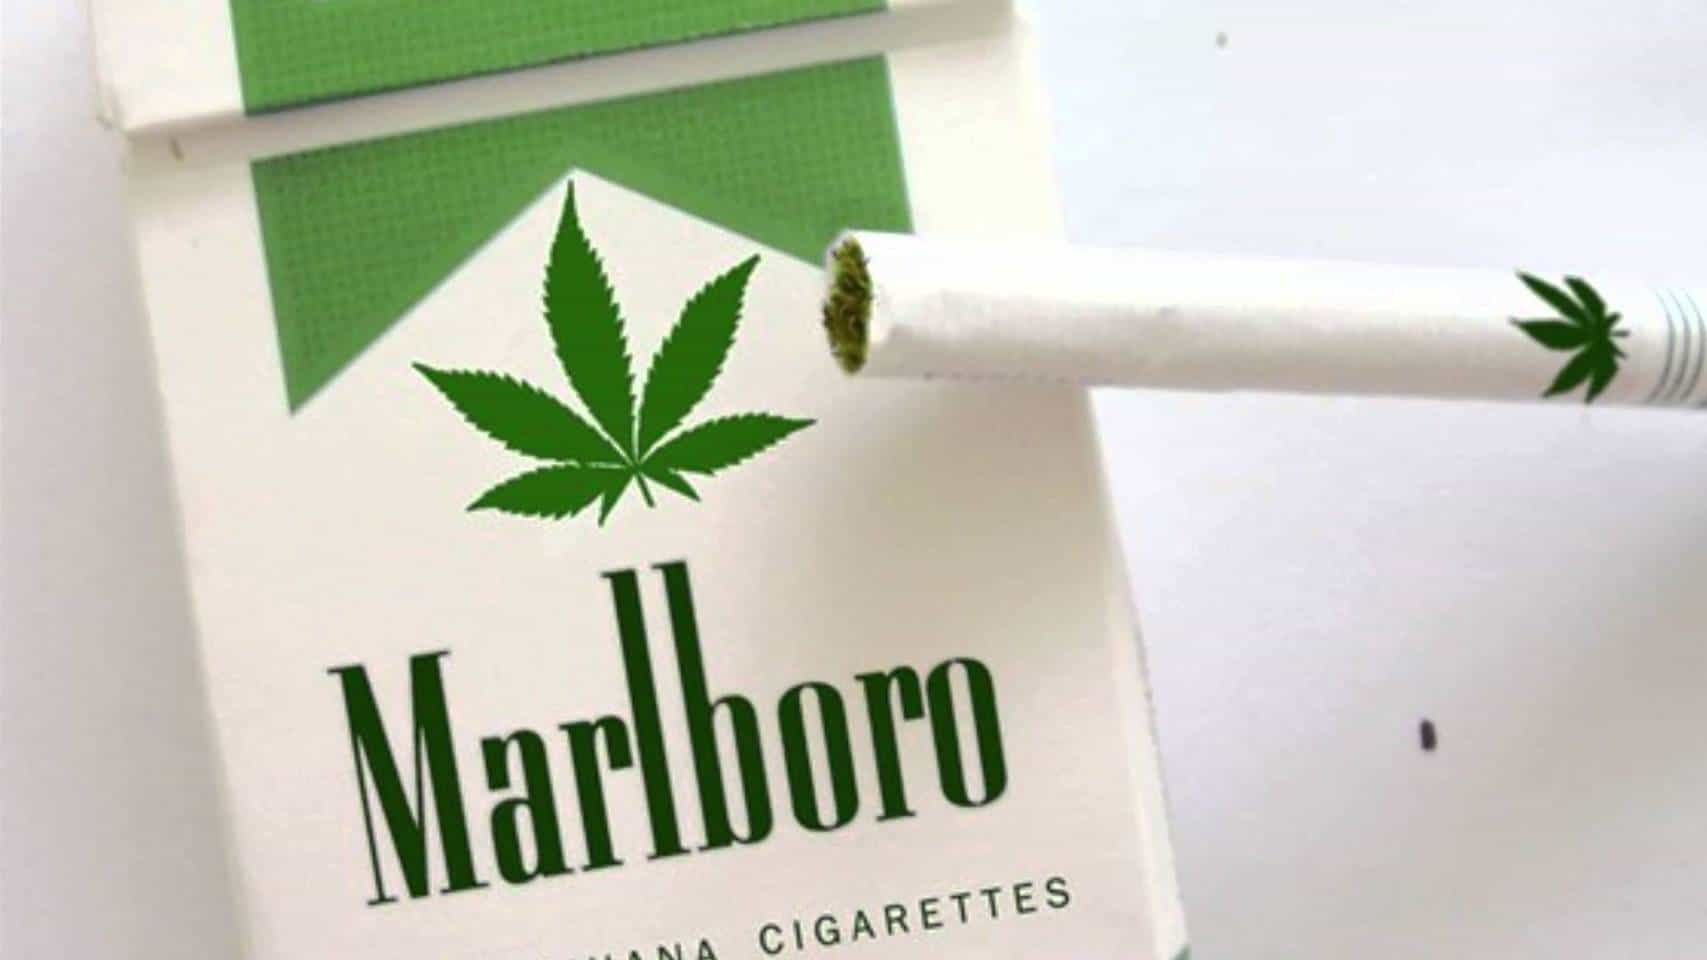 Marlboro Marijuana Cigarettes For Sale In Four U.S. States